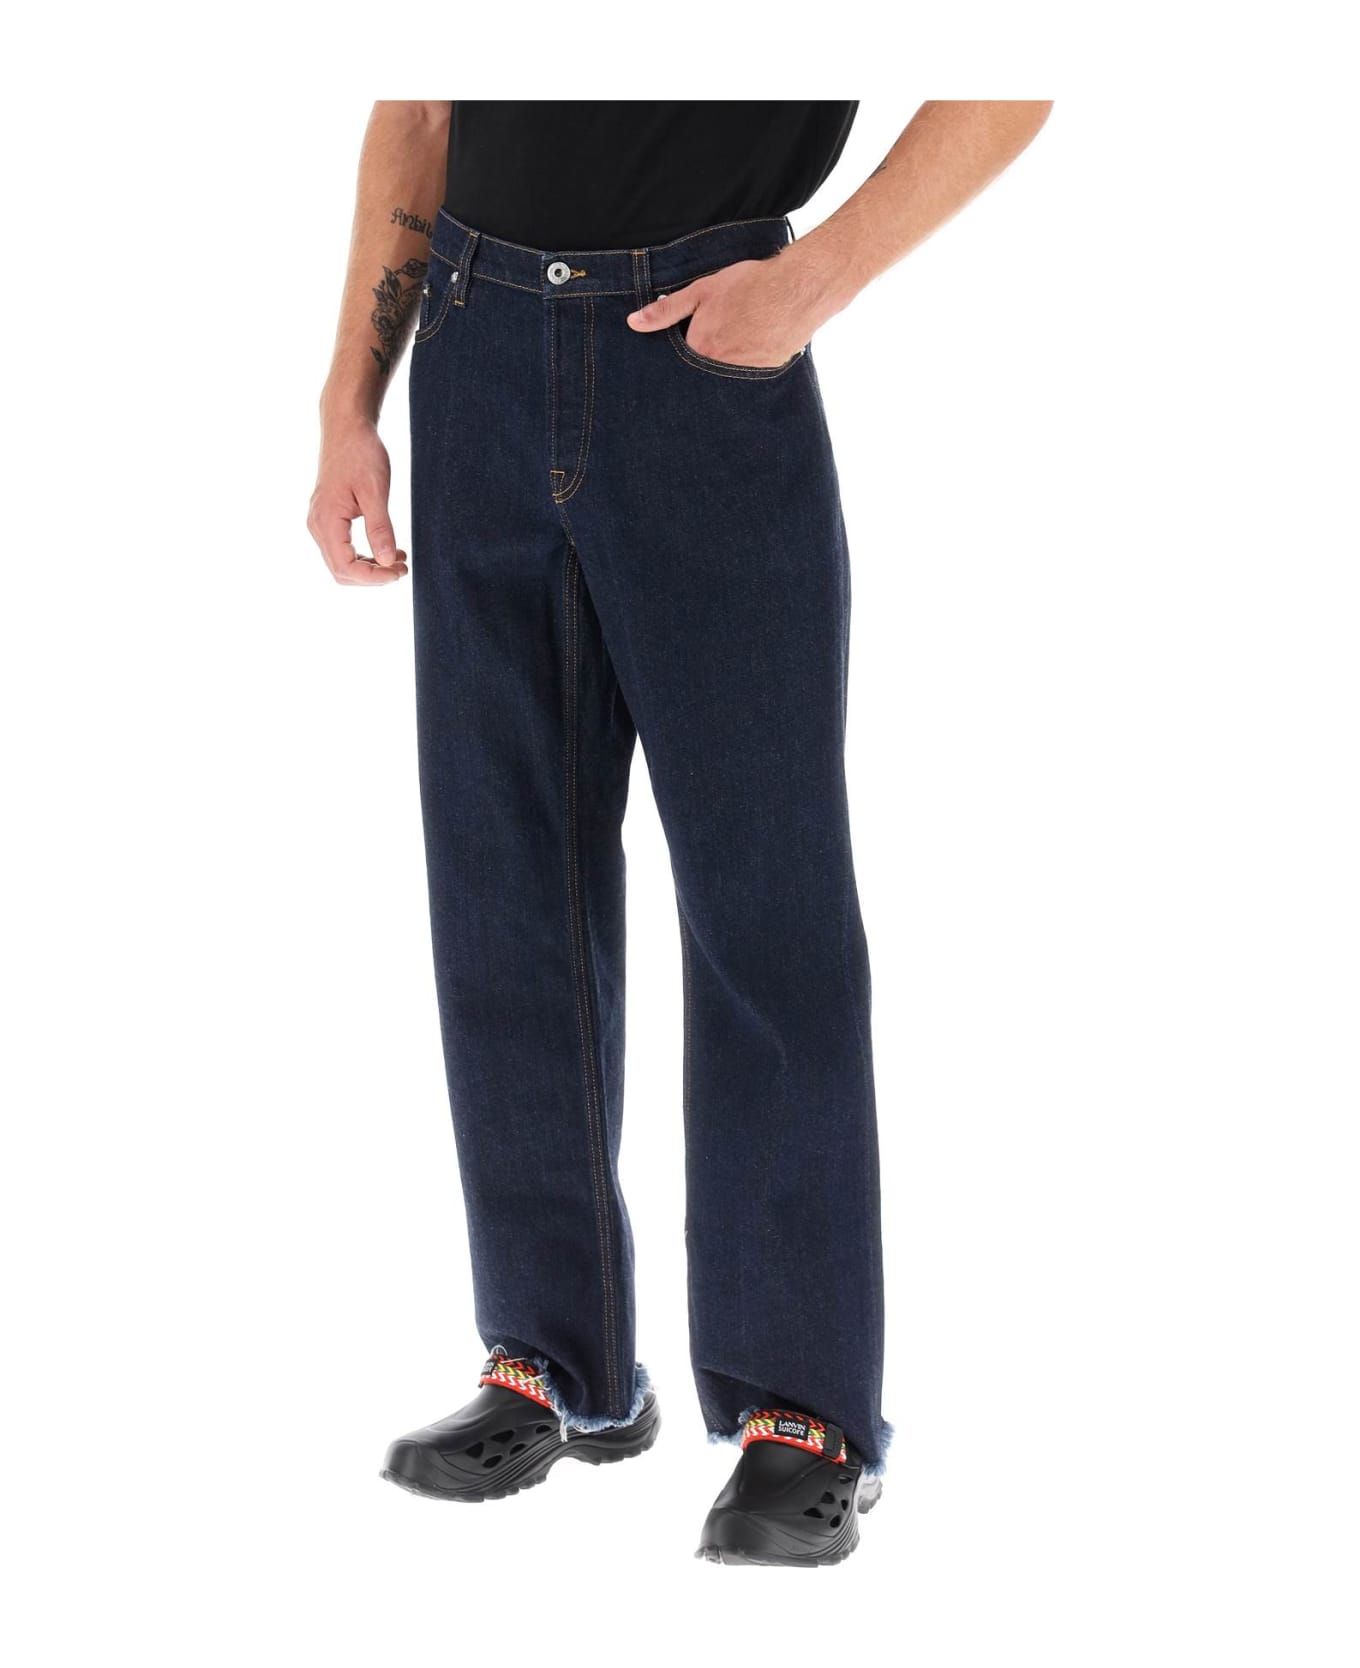 Lanvin Jeans With Frayed Hem - Blu デニム